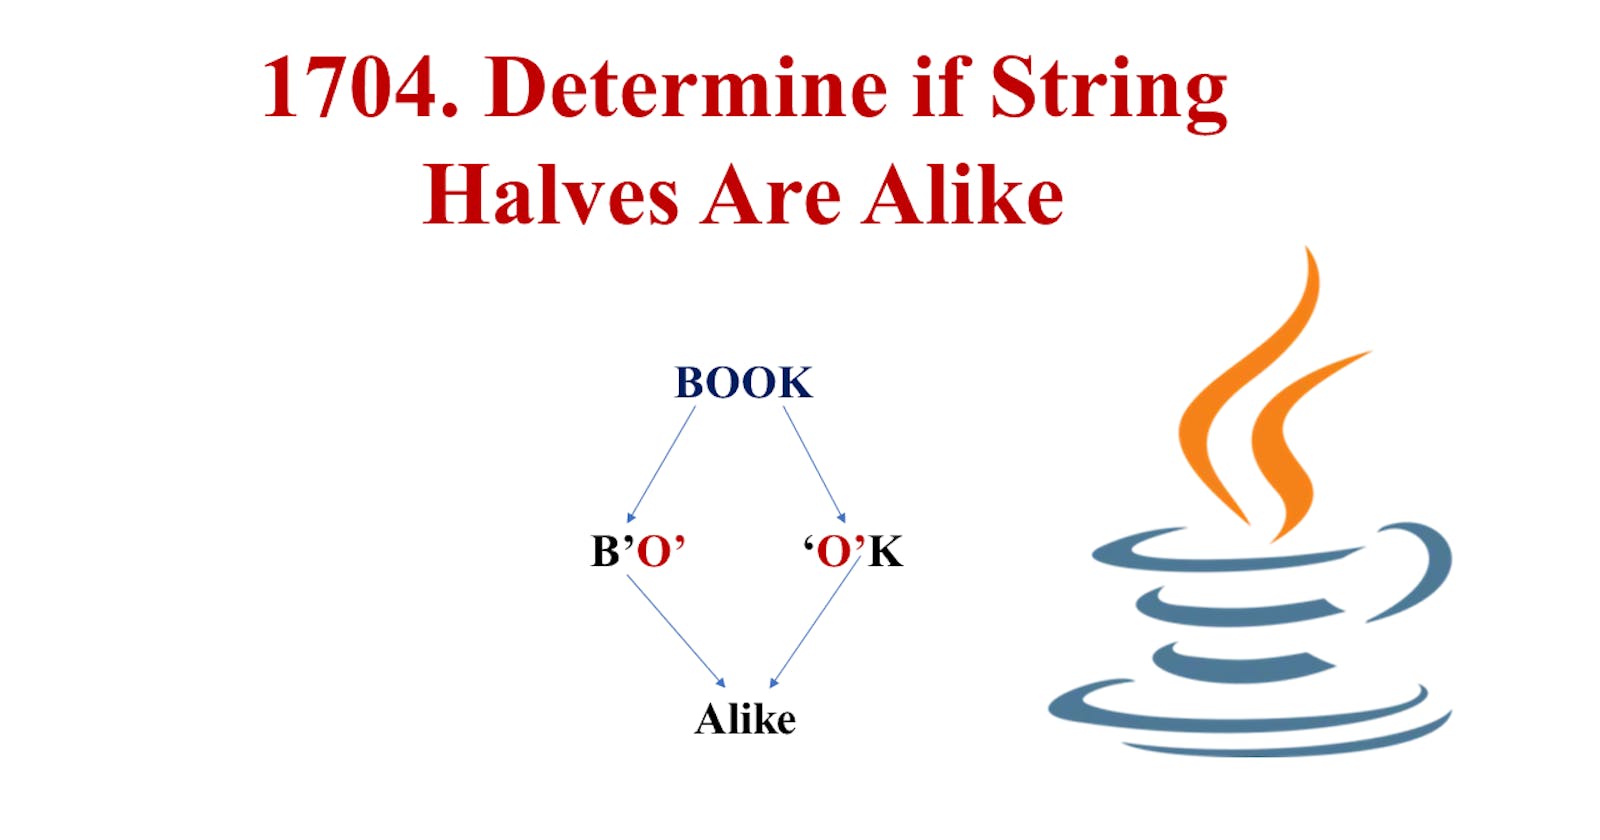 1704. Determine if String Halves Are Alike